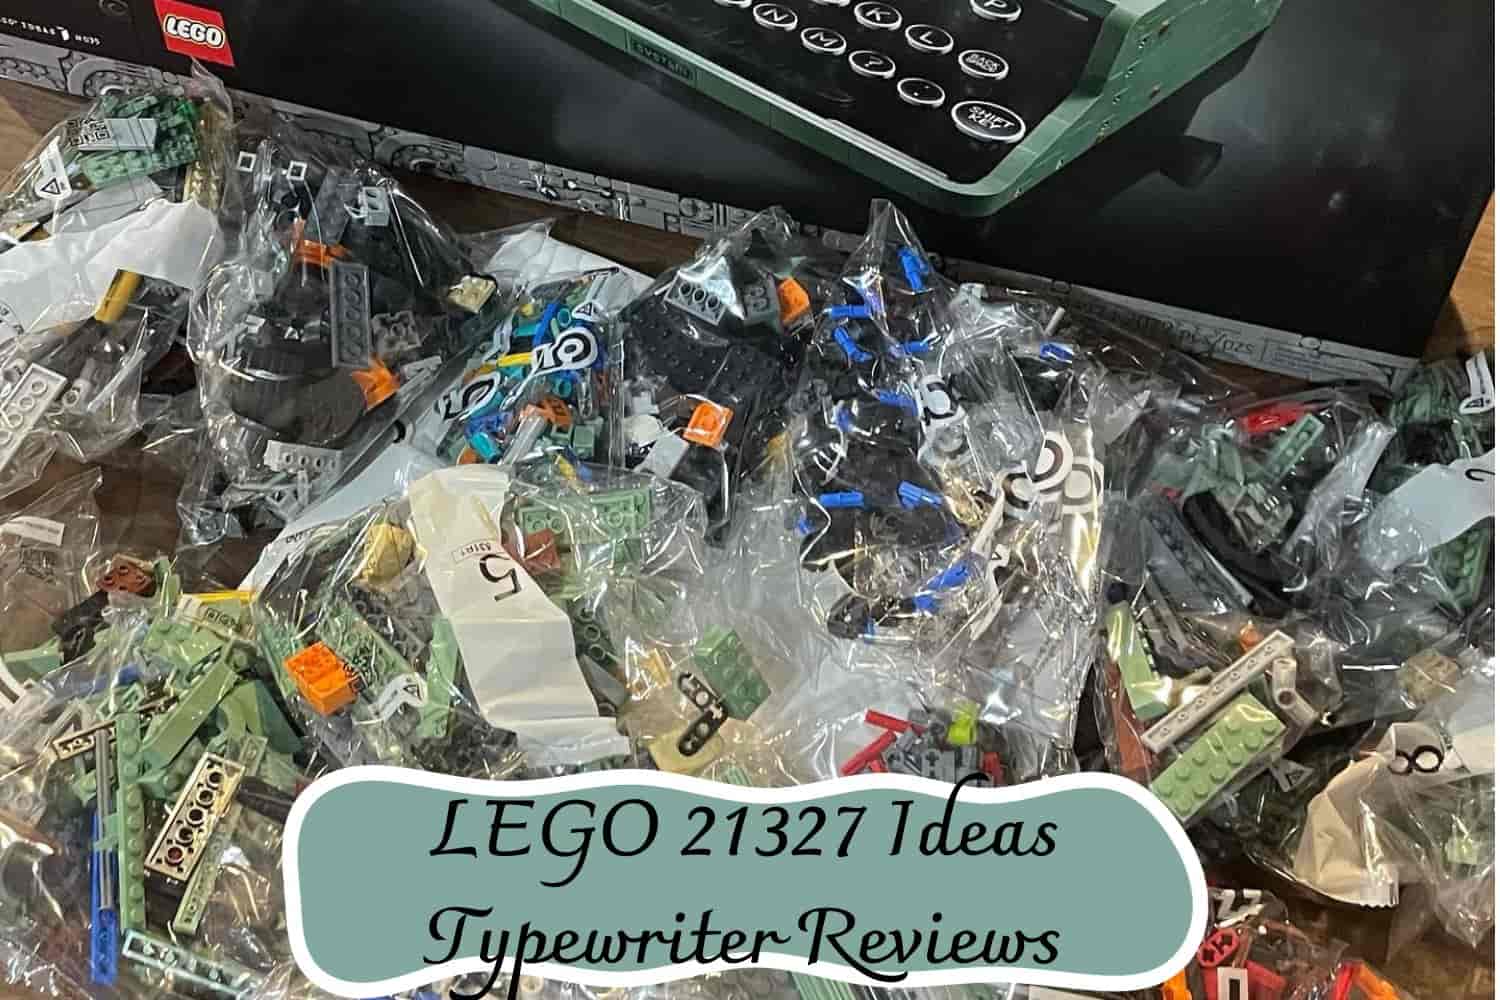 LEGO 21327 Ideas Typewriter Reviews